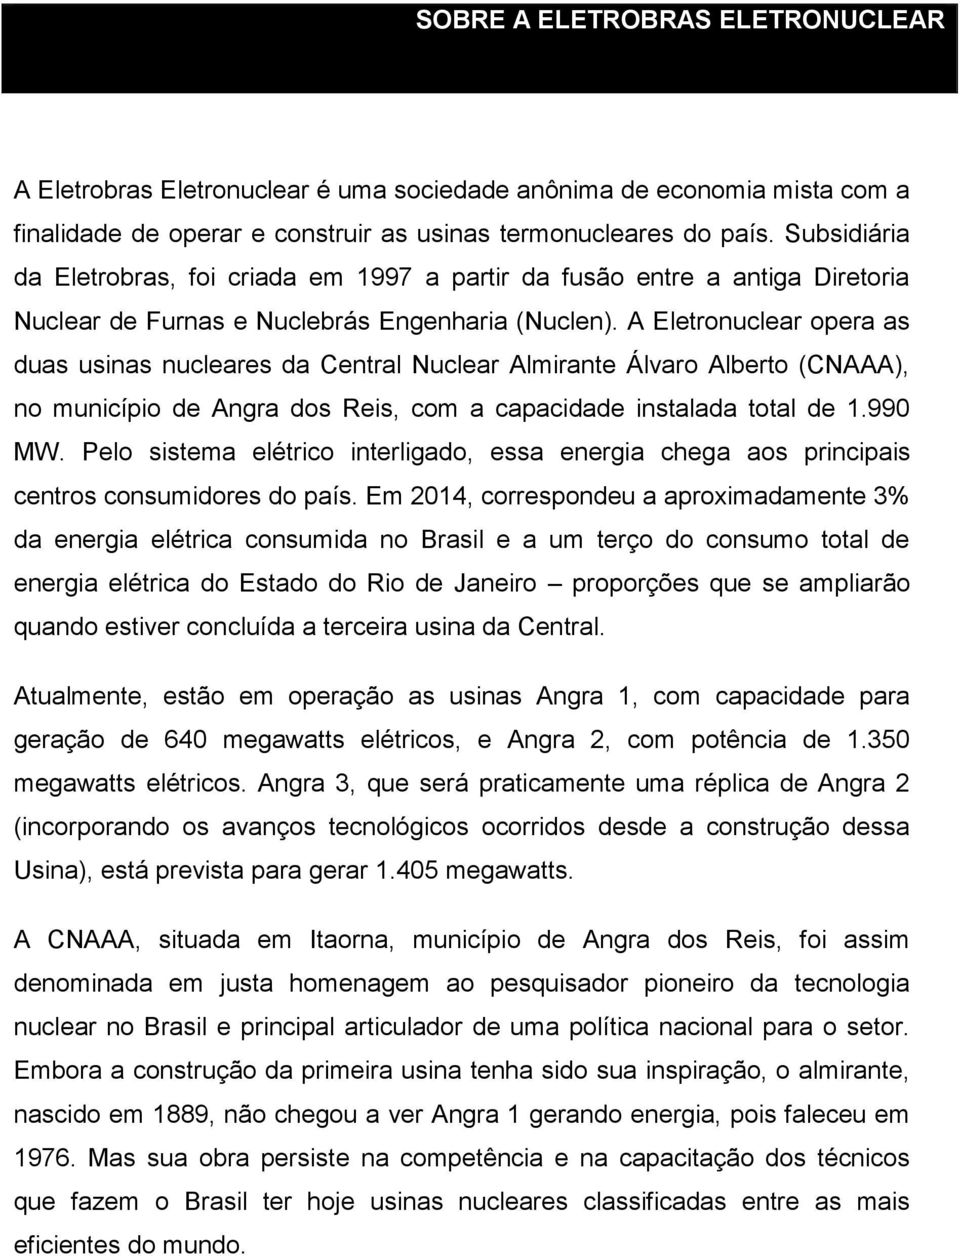 A Eletronuclear opera as duas usinas nucleares da Central Nuclear Almirante Álvaro Alberto (CNAAA), no município de Angra dos Reis, com a capacidade instalada total de 1.990 MW.